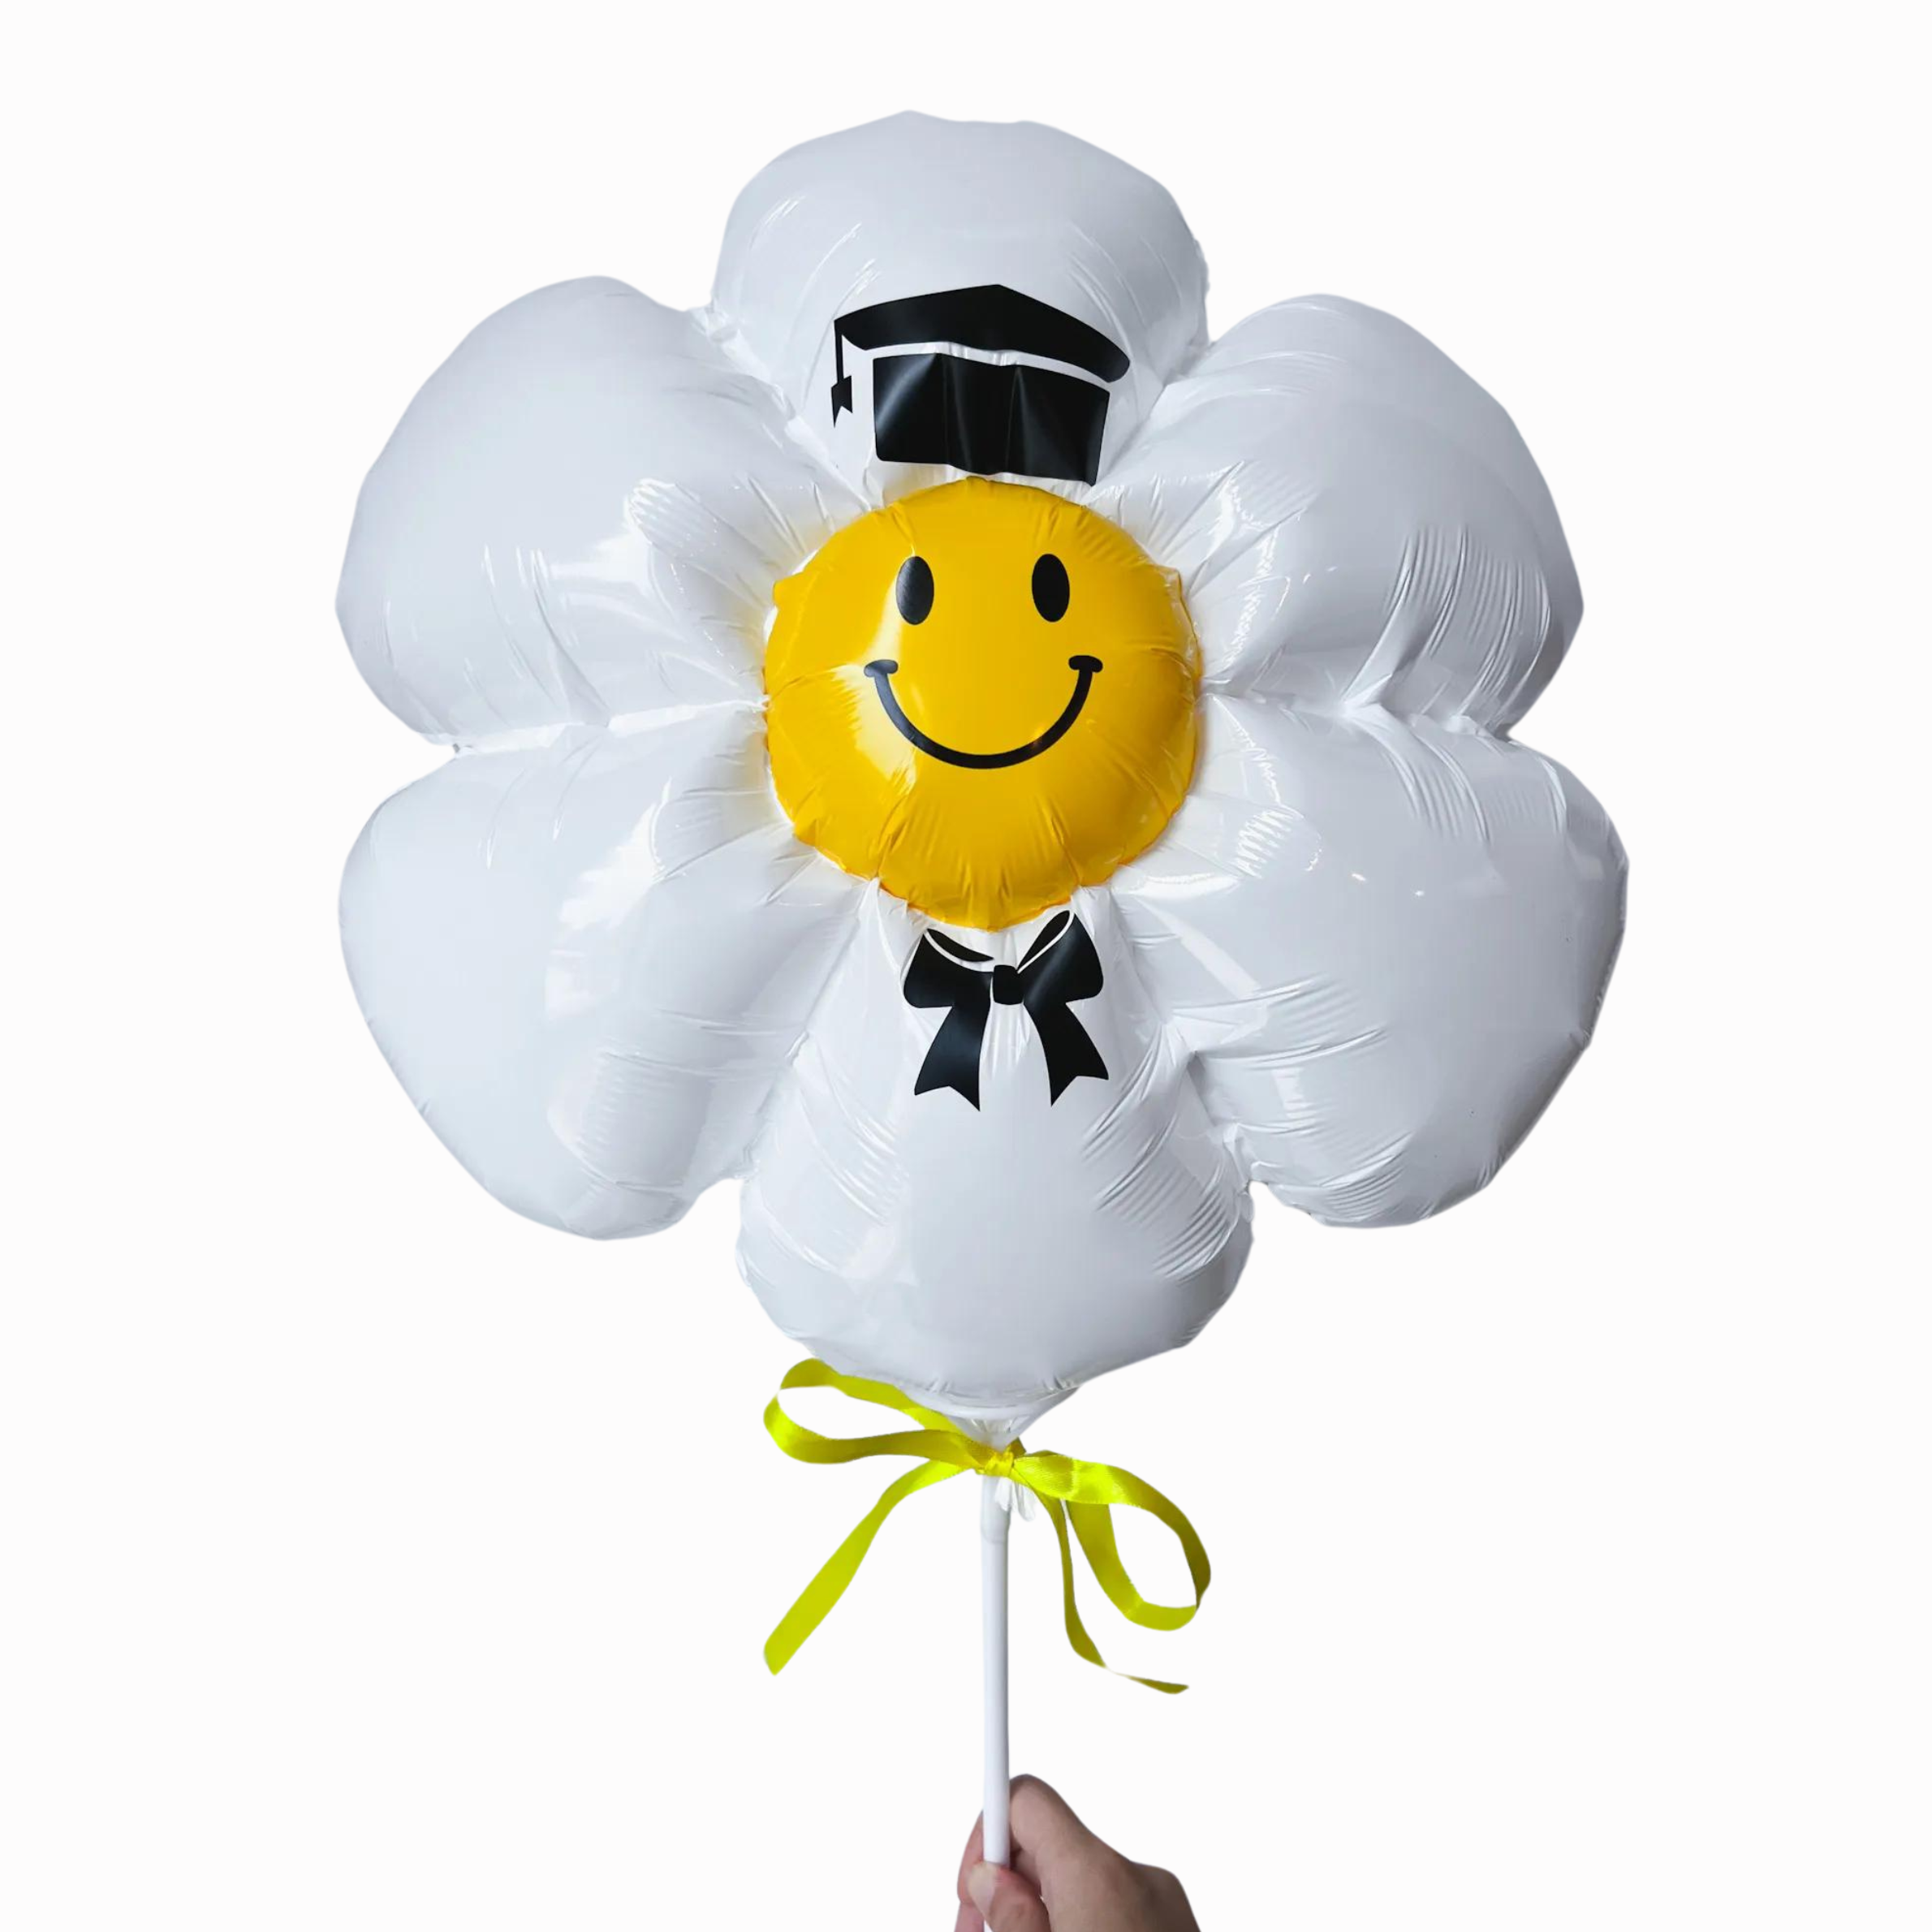 Add-Ons: Graduation Smiley Face Daisy Balloon